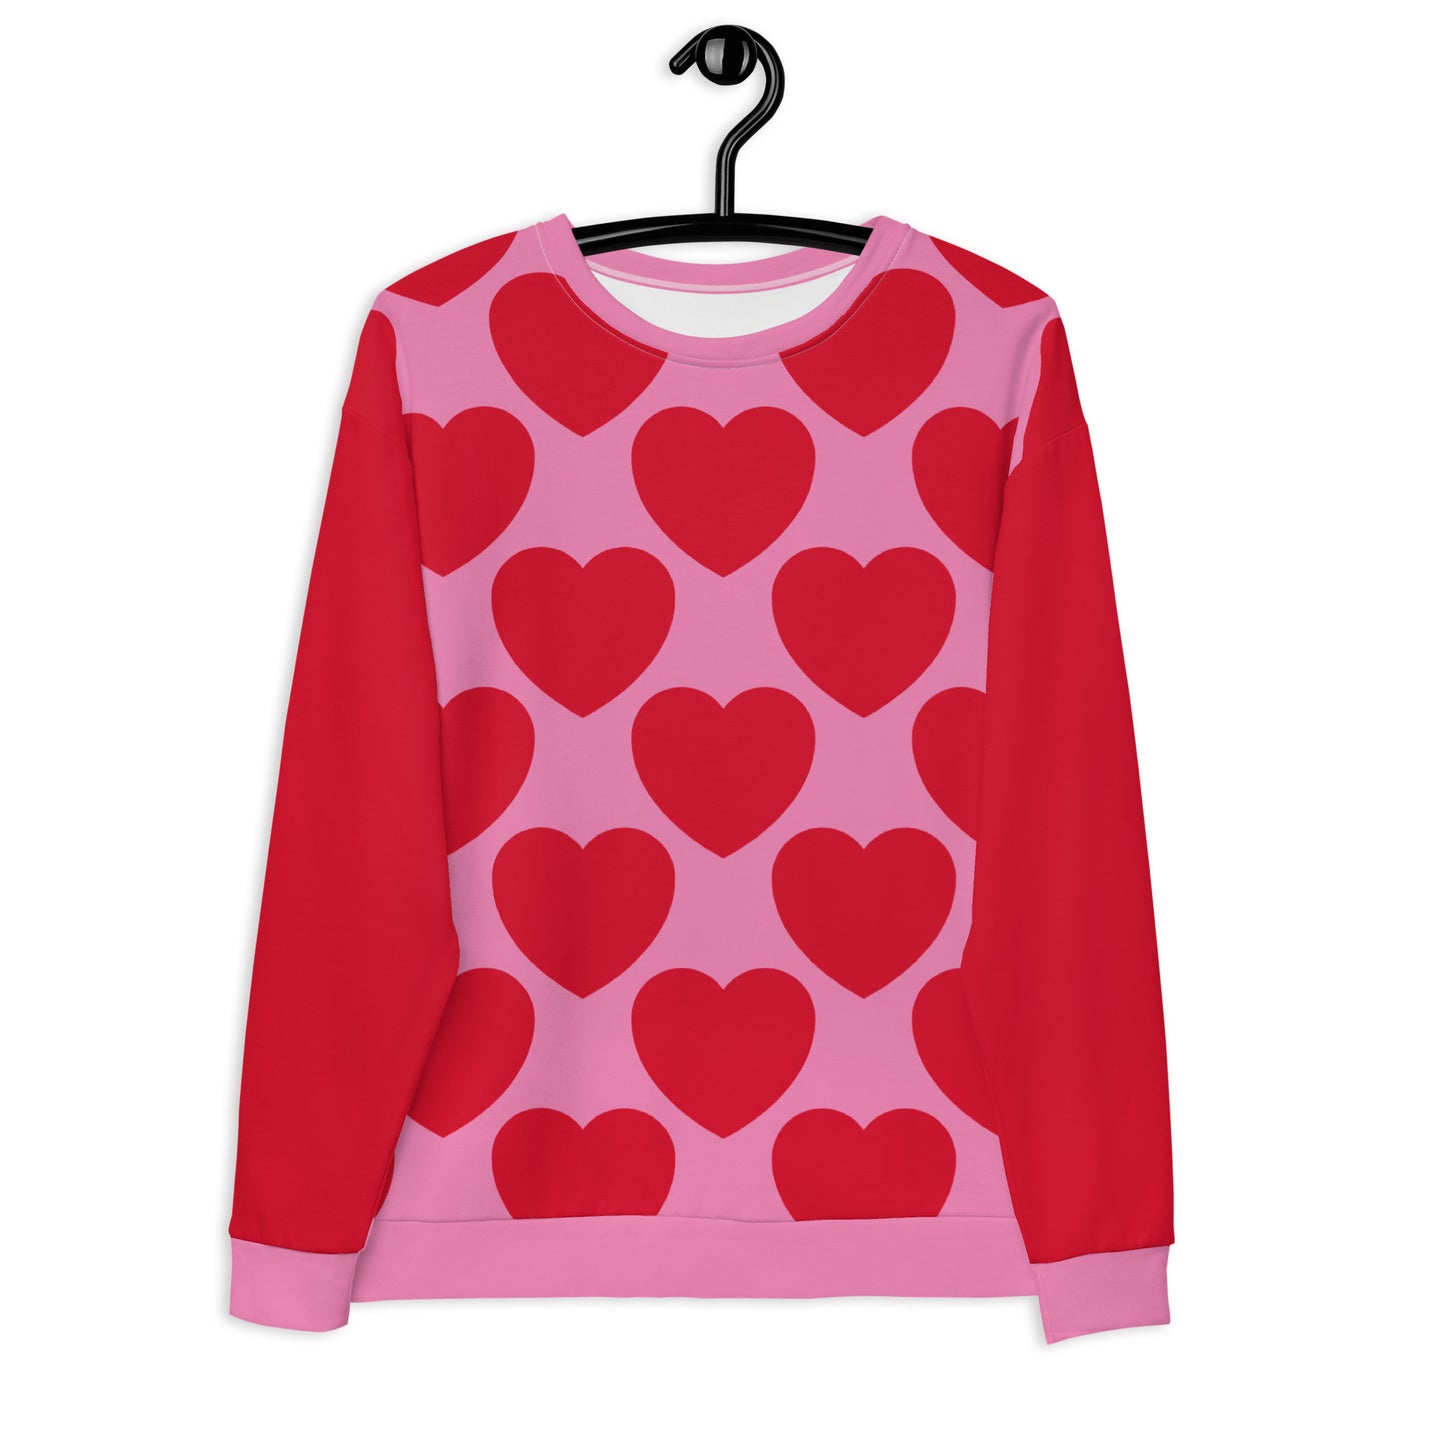 ELLIE LOVE red - Unisex Sweatshirt